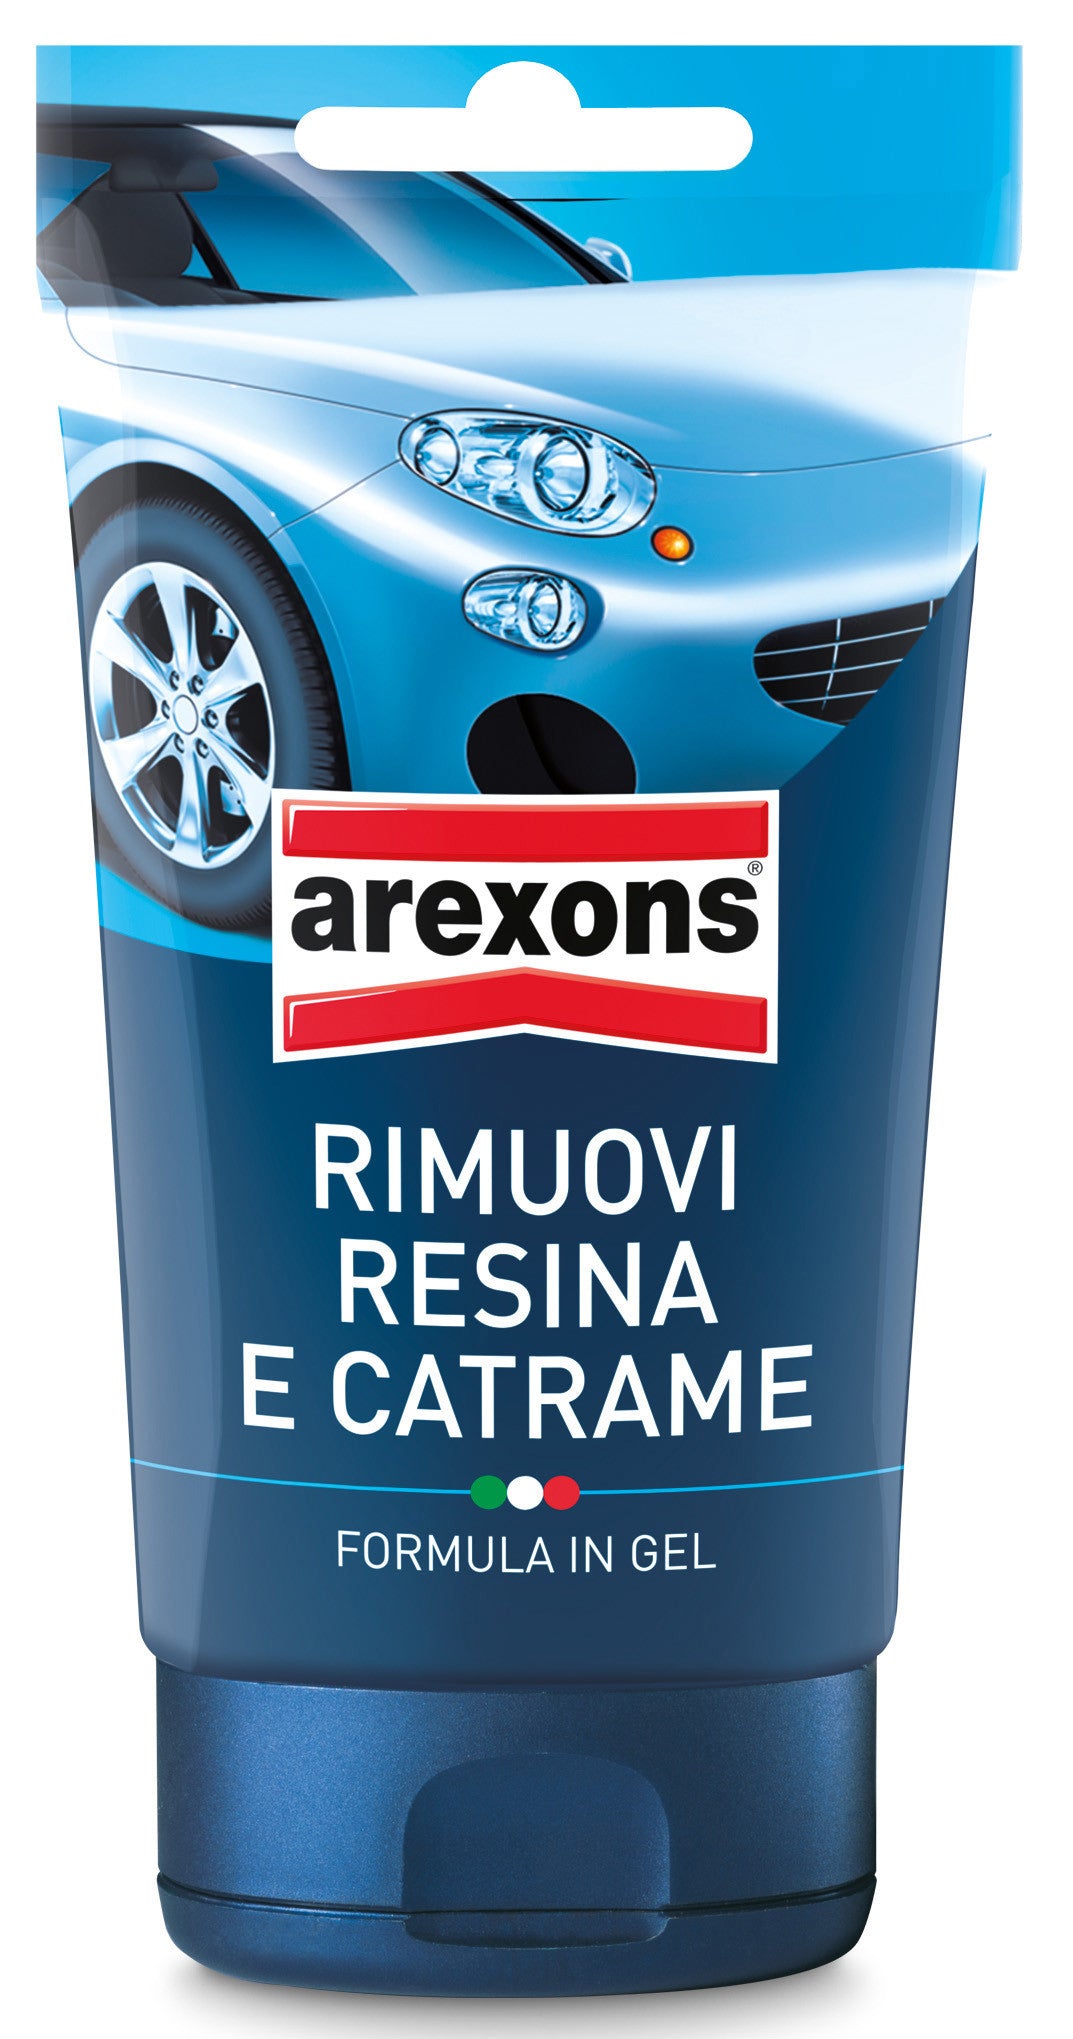 Arexons art.8354 rimuovi resina-catrame